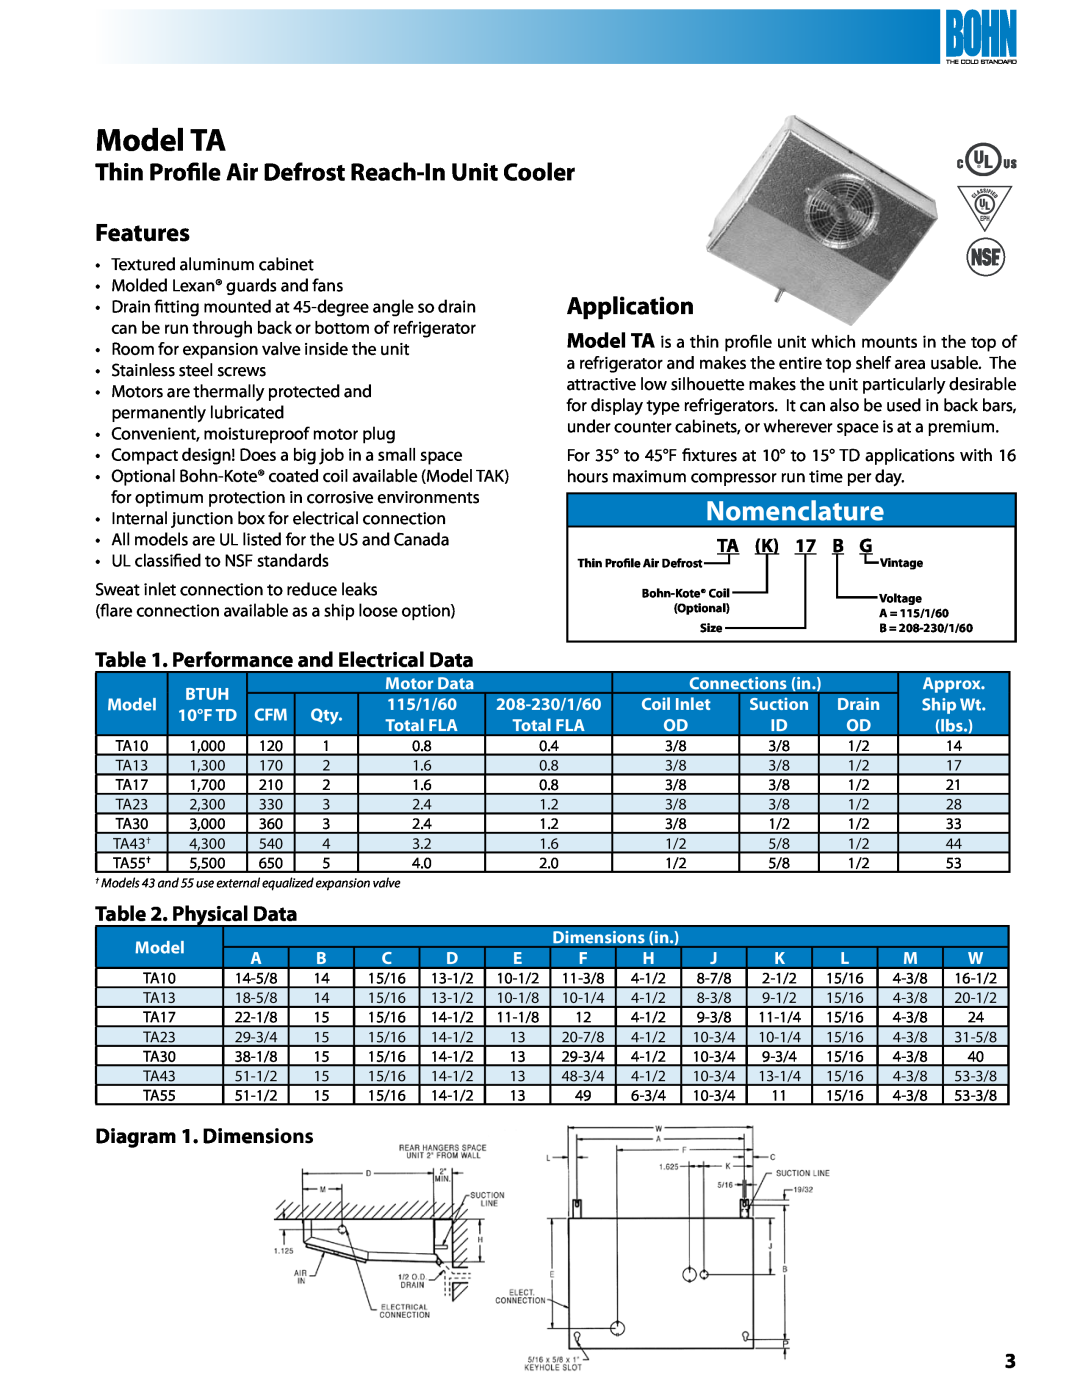 Heatcraft Refrigeration Products KMK, TL, VA Model TA, Nomenclature, Thin Profile Air Defrost Reach-InUnit Cooler, Features 